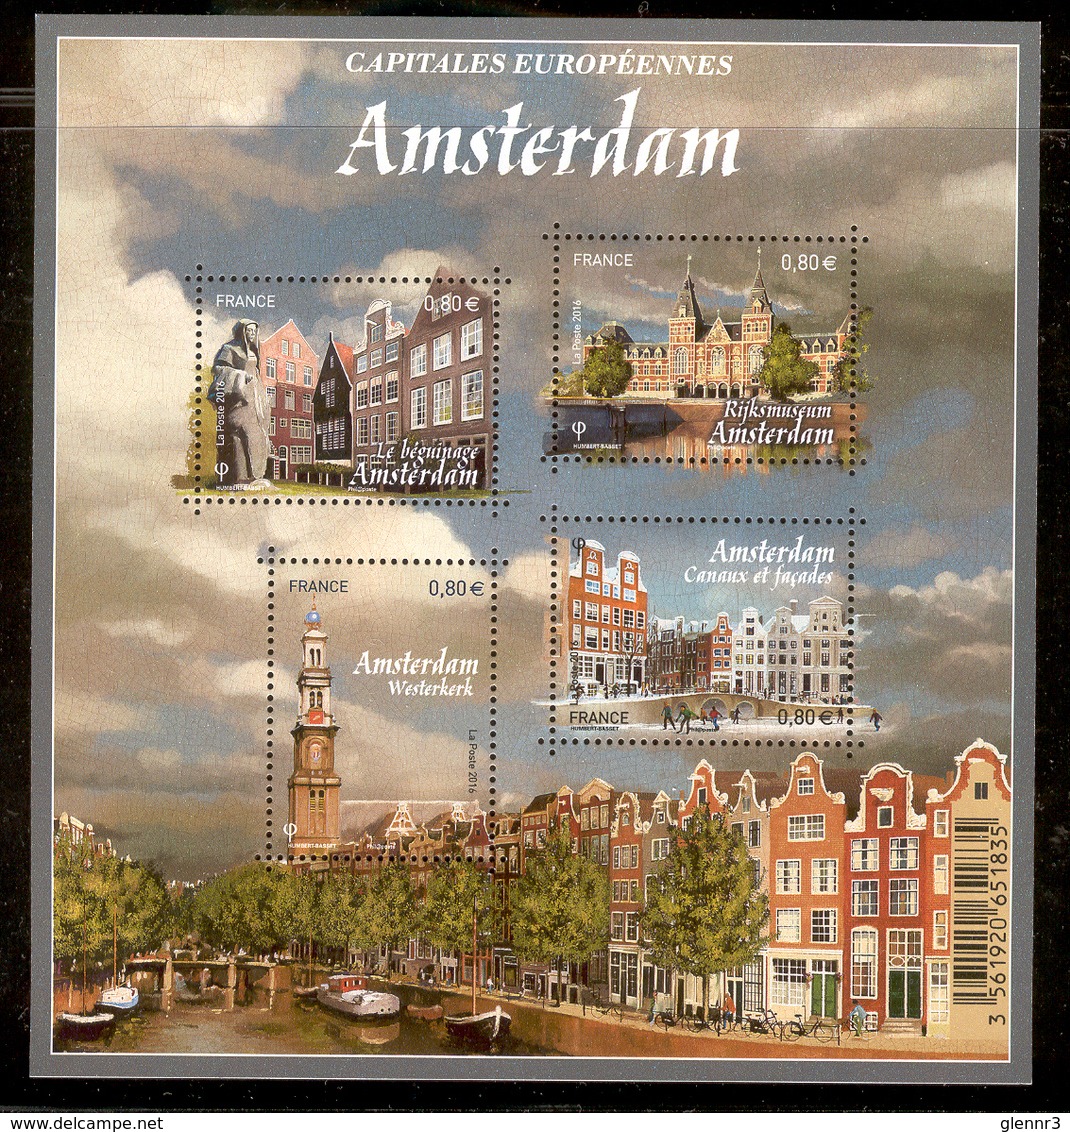 FRANCE 2016 European Capitals-Amsterdam, Scott # 5114 MNH Souvenir Sheet Of 4 - Unused Stamps